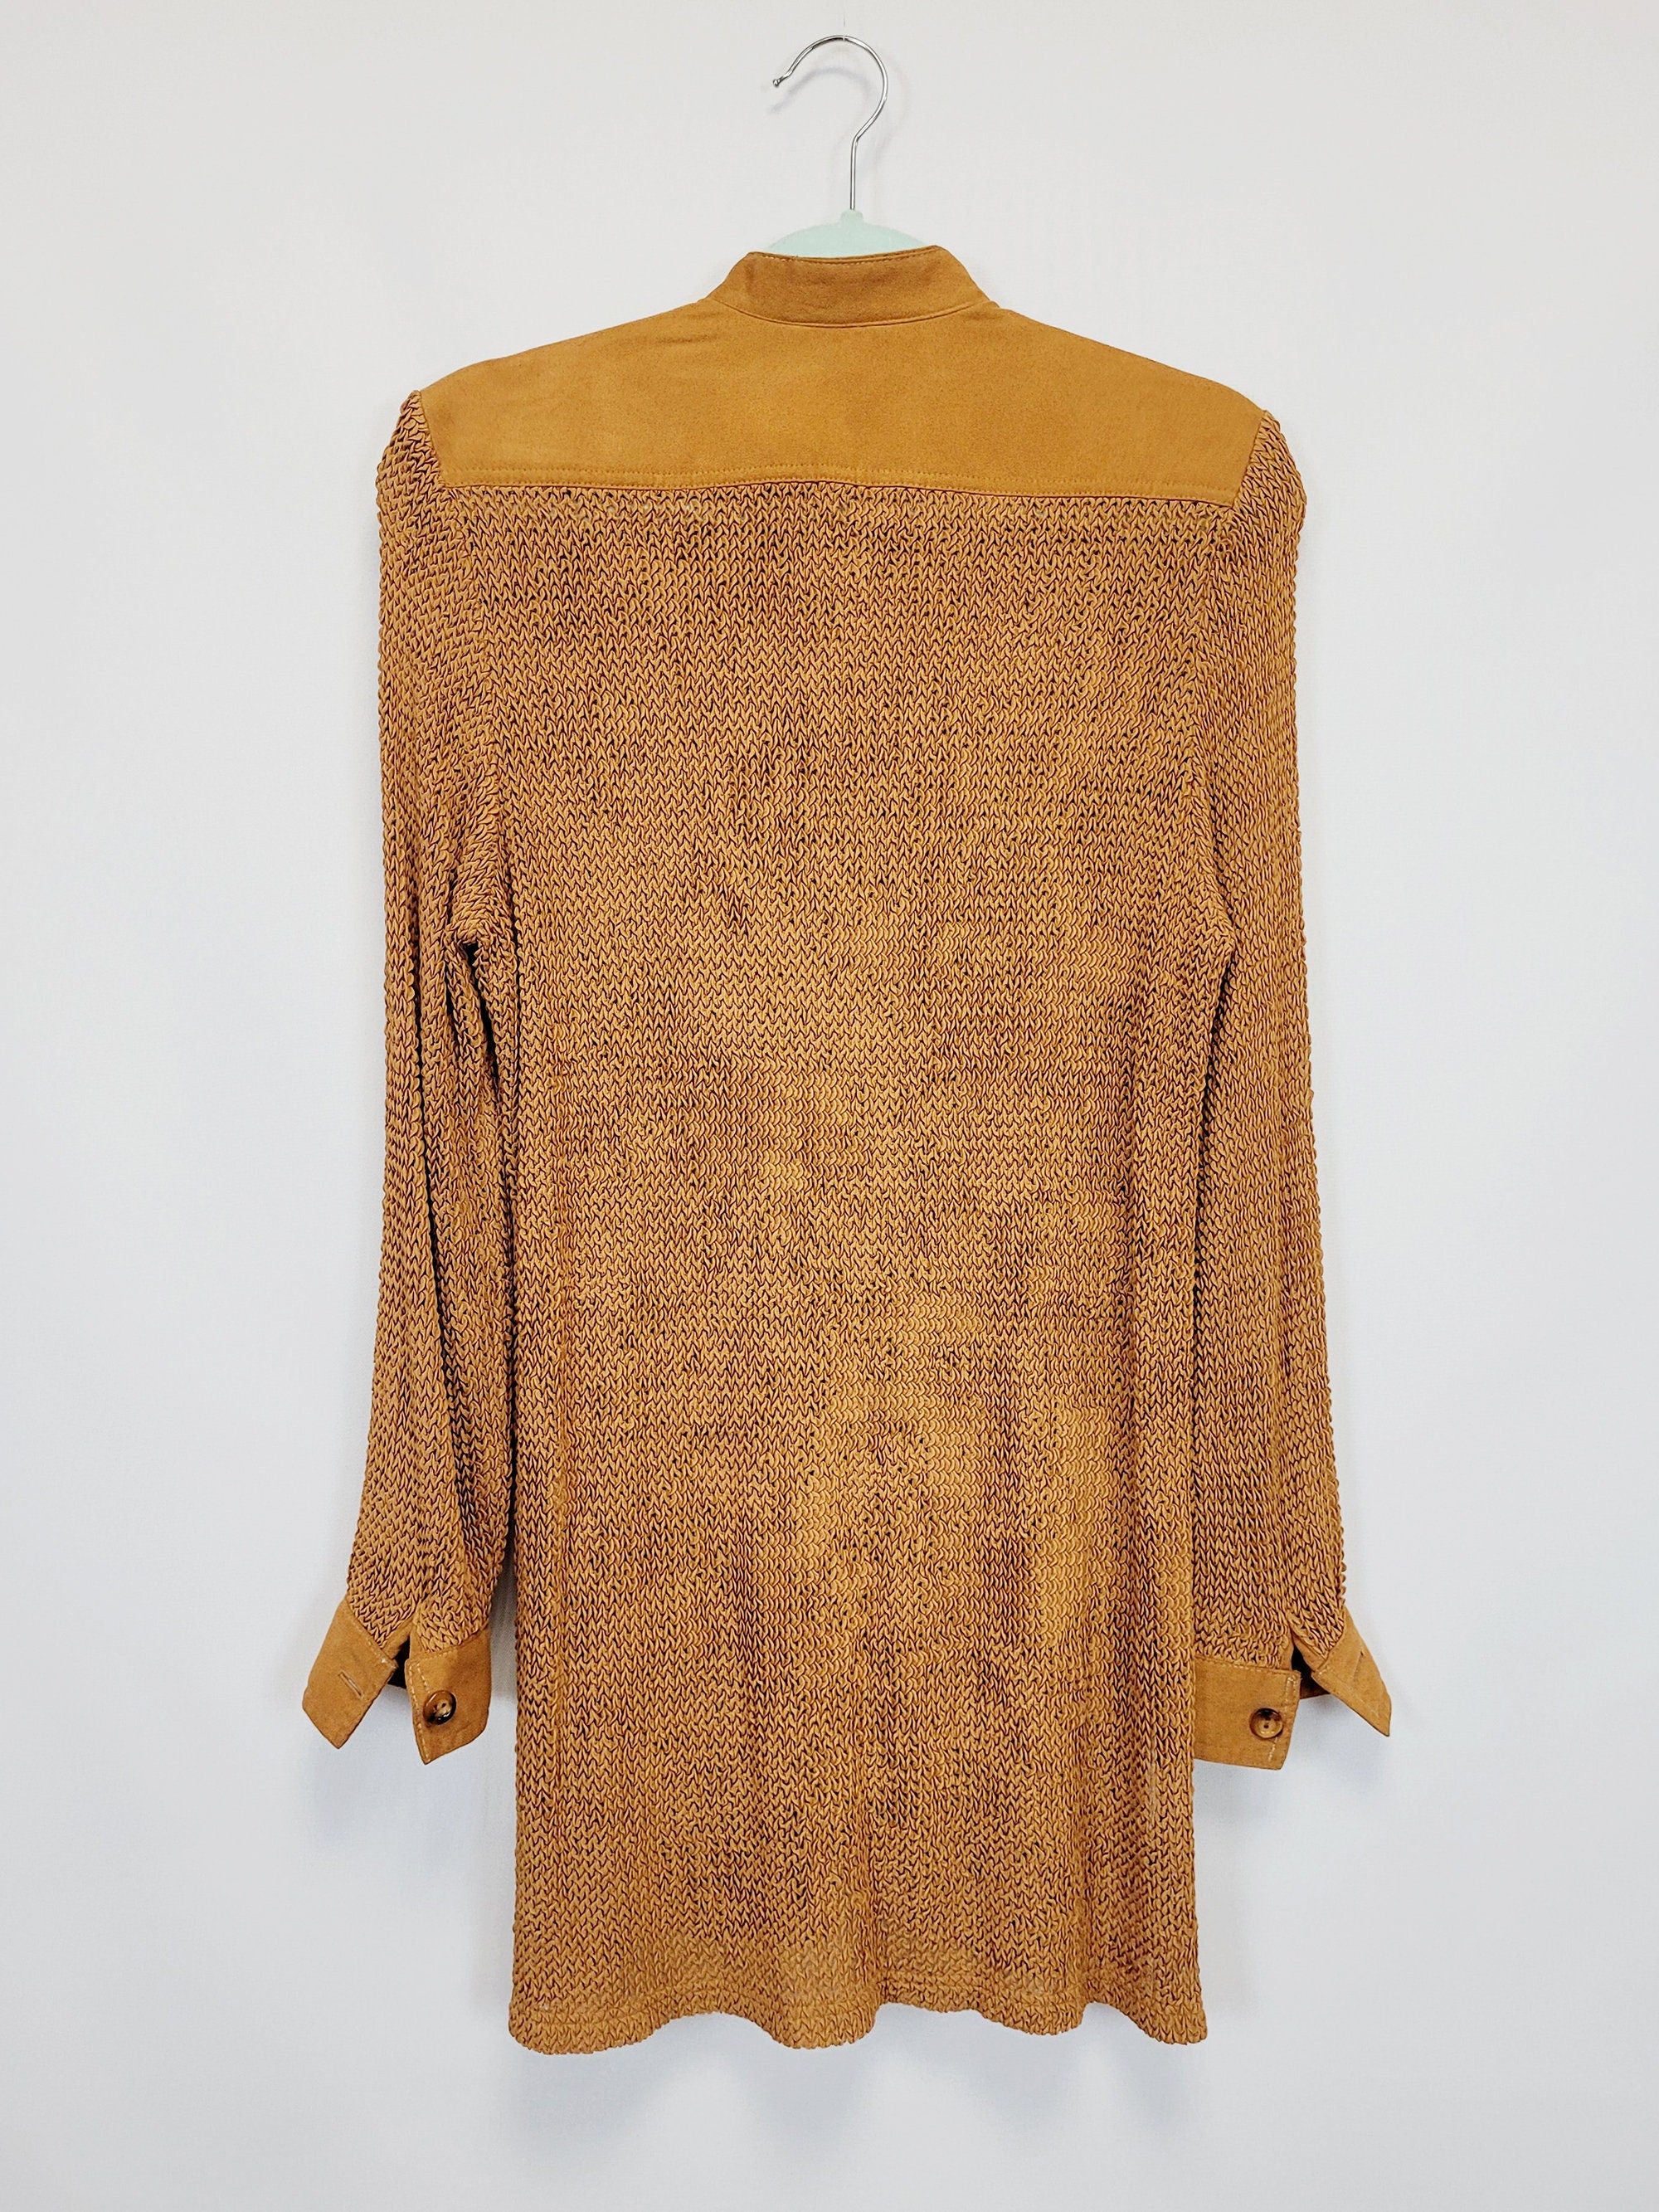 90s brown knit imitation minimalist long shirt top